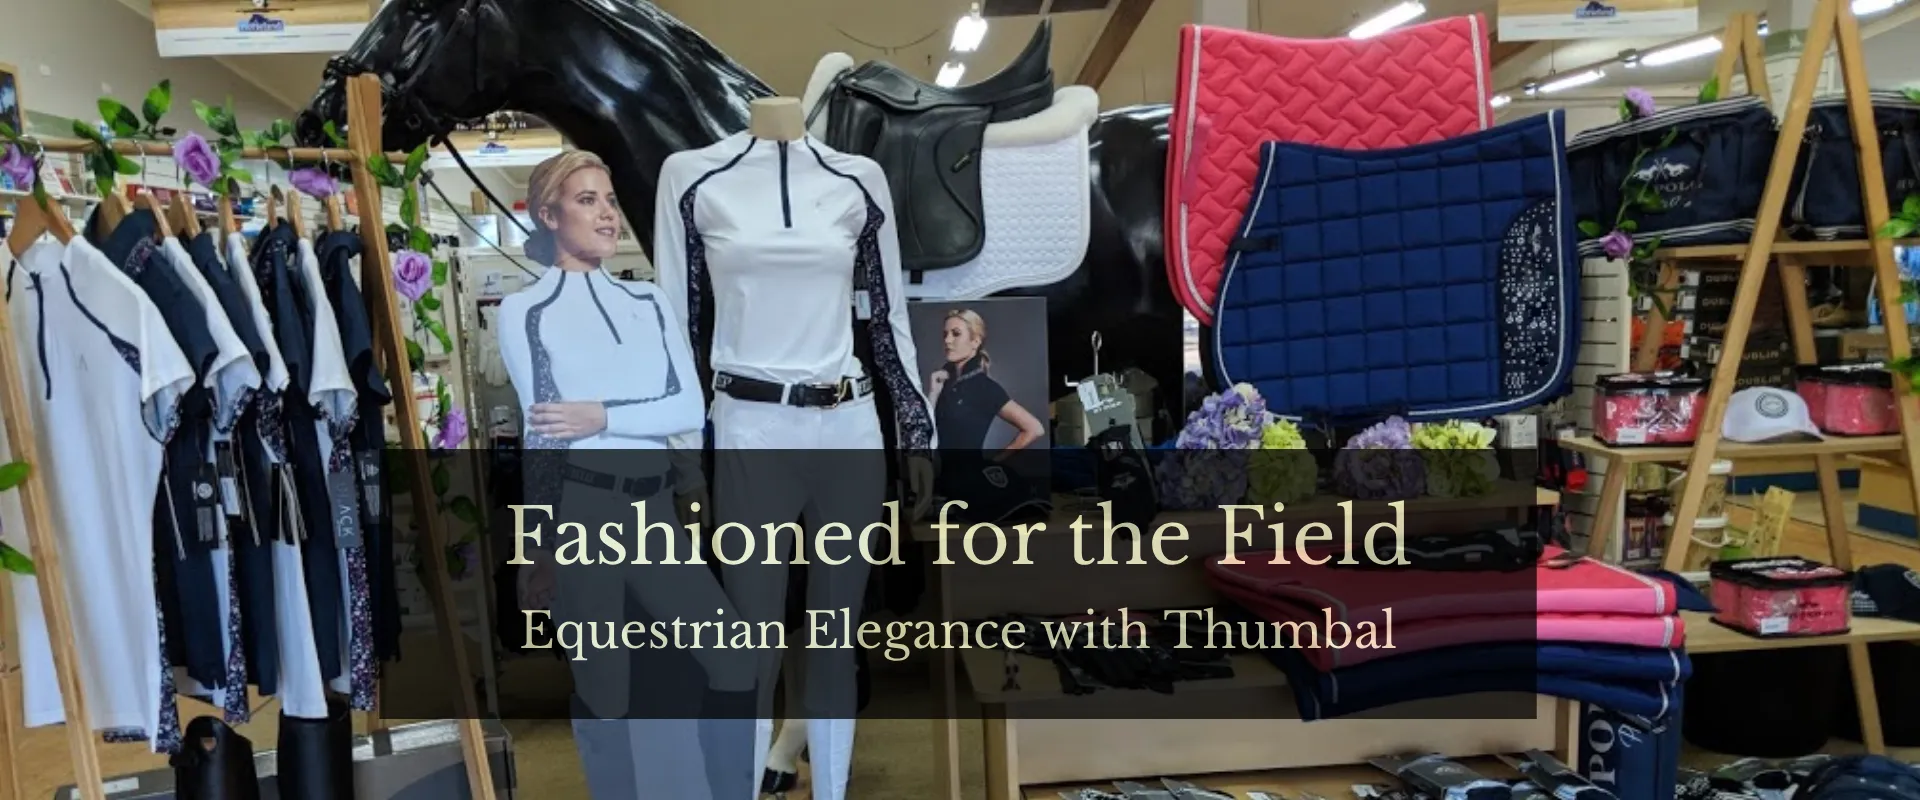 equestrian-wear-banner-thumbal